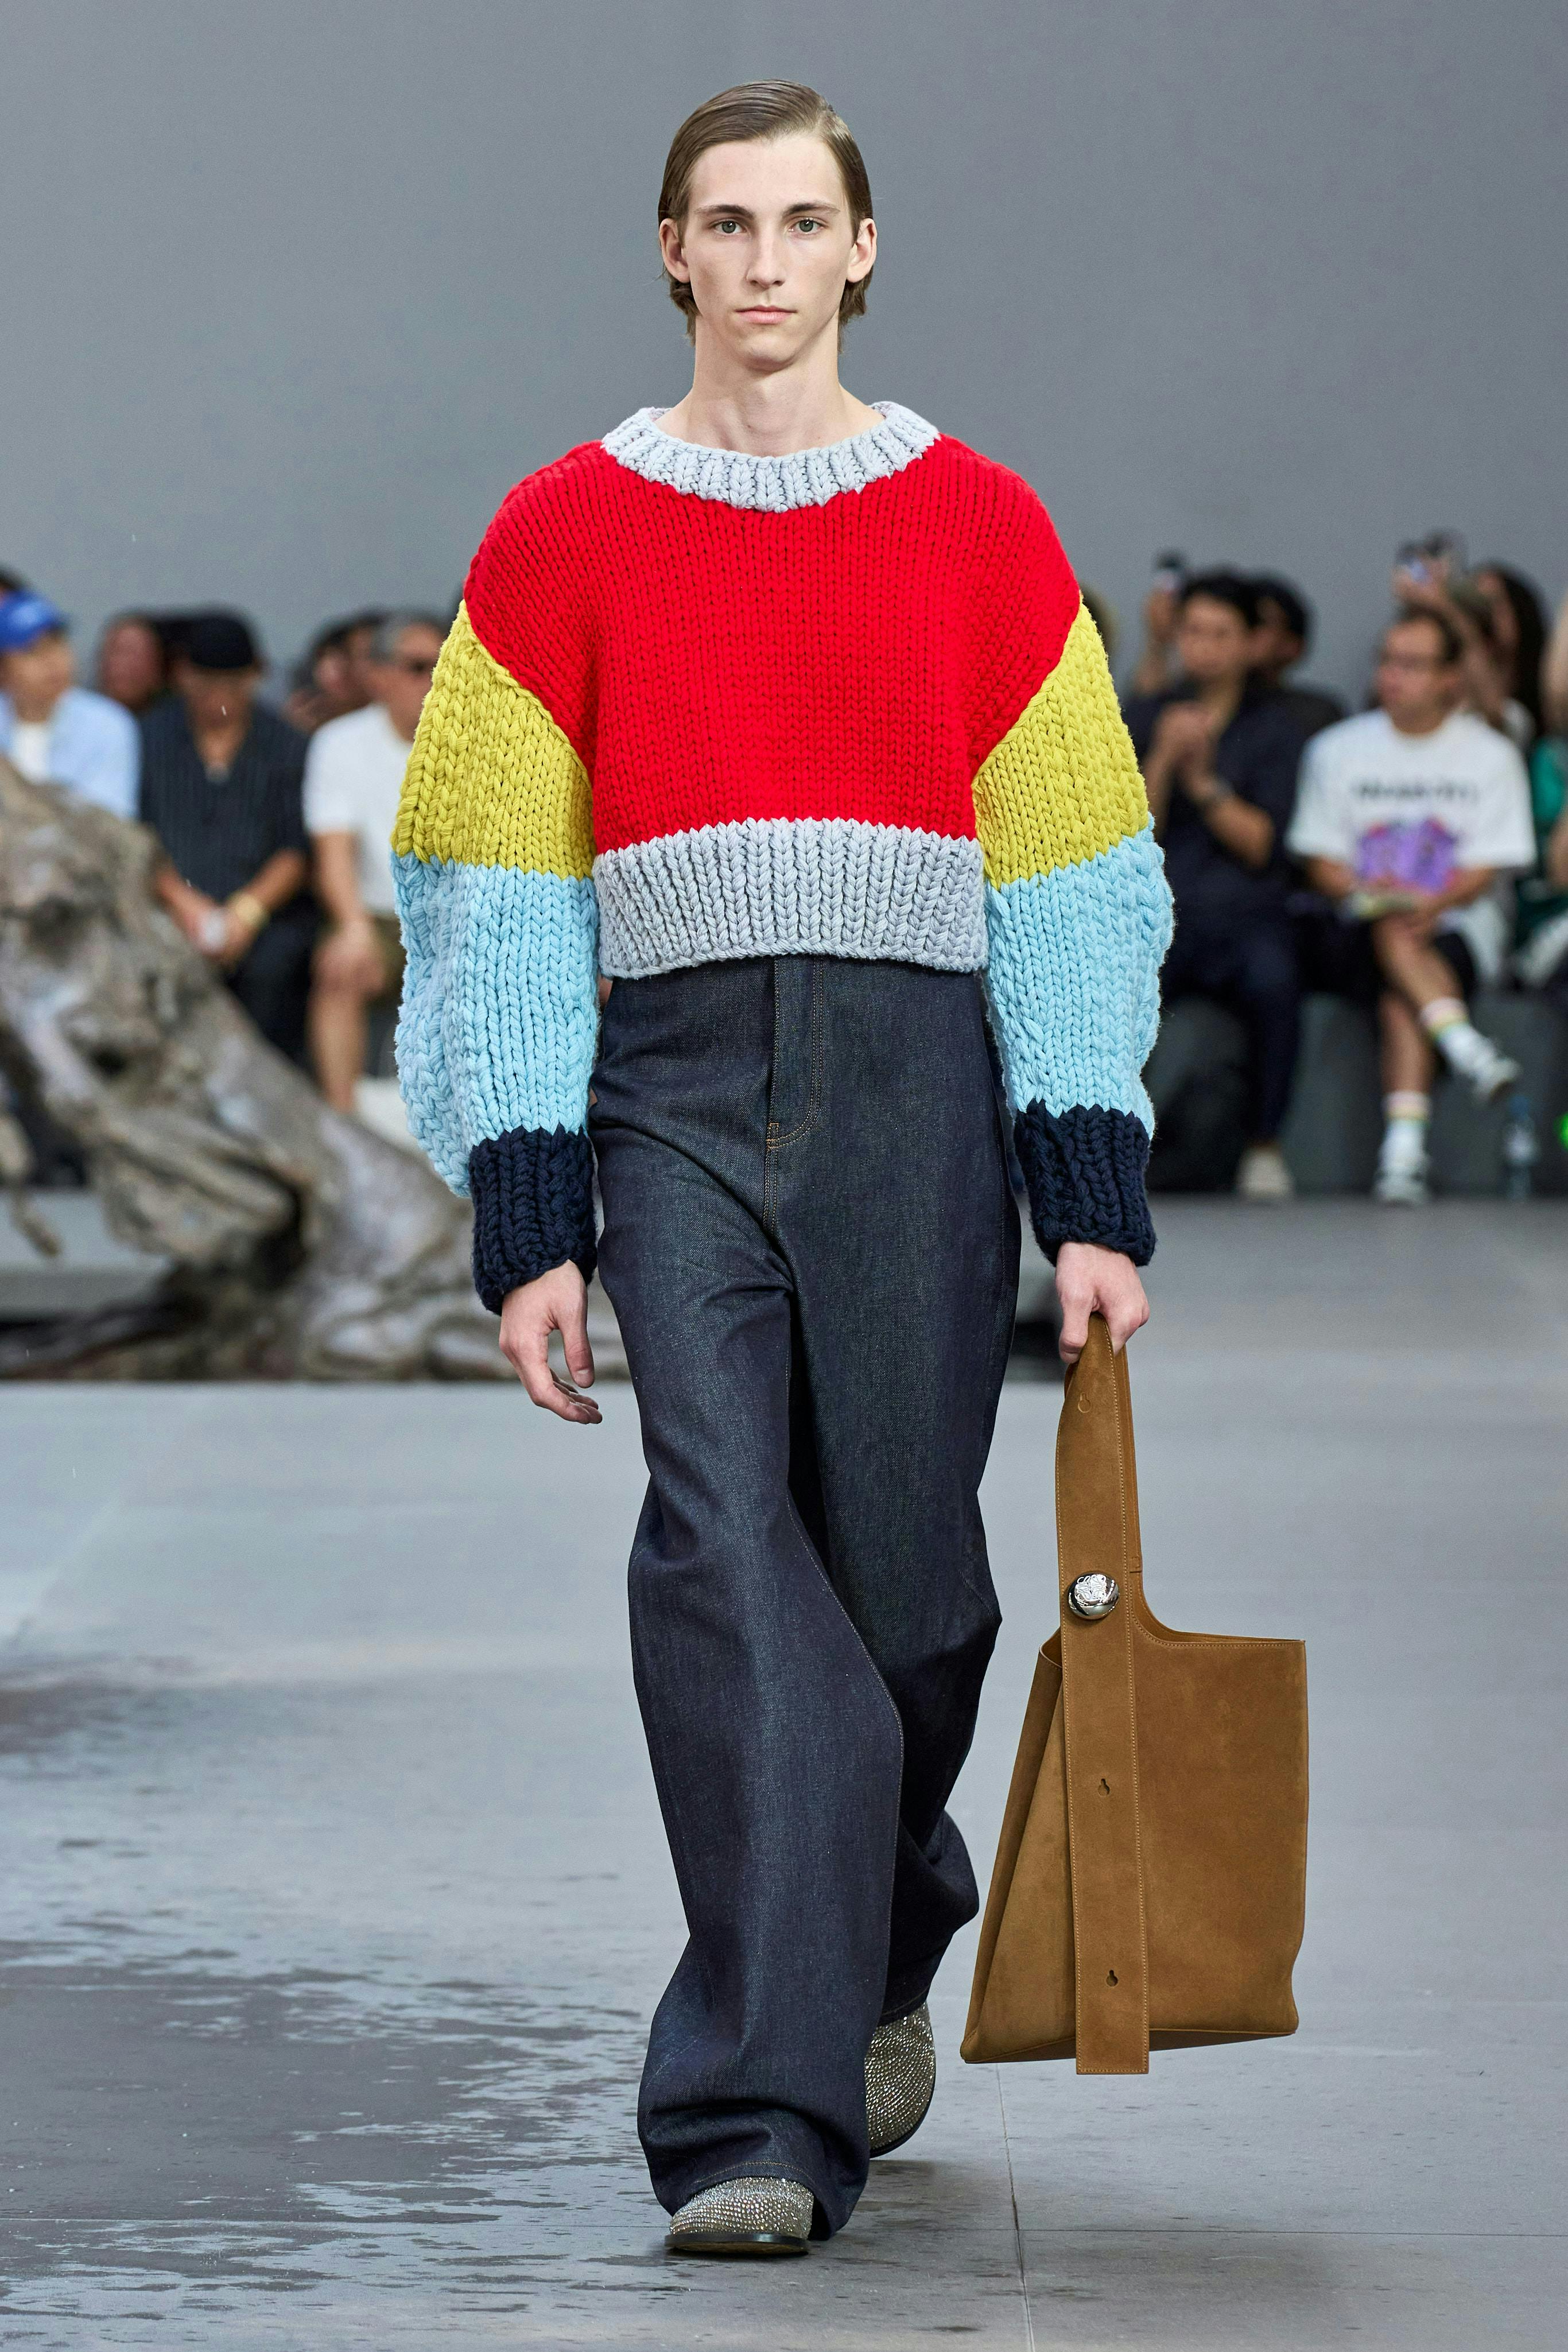 clothing knitwear sweater accessories bag handbag pants person